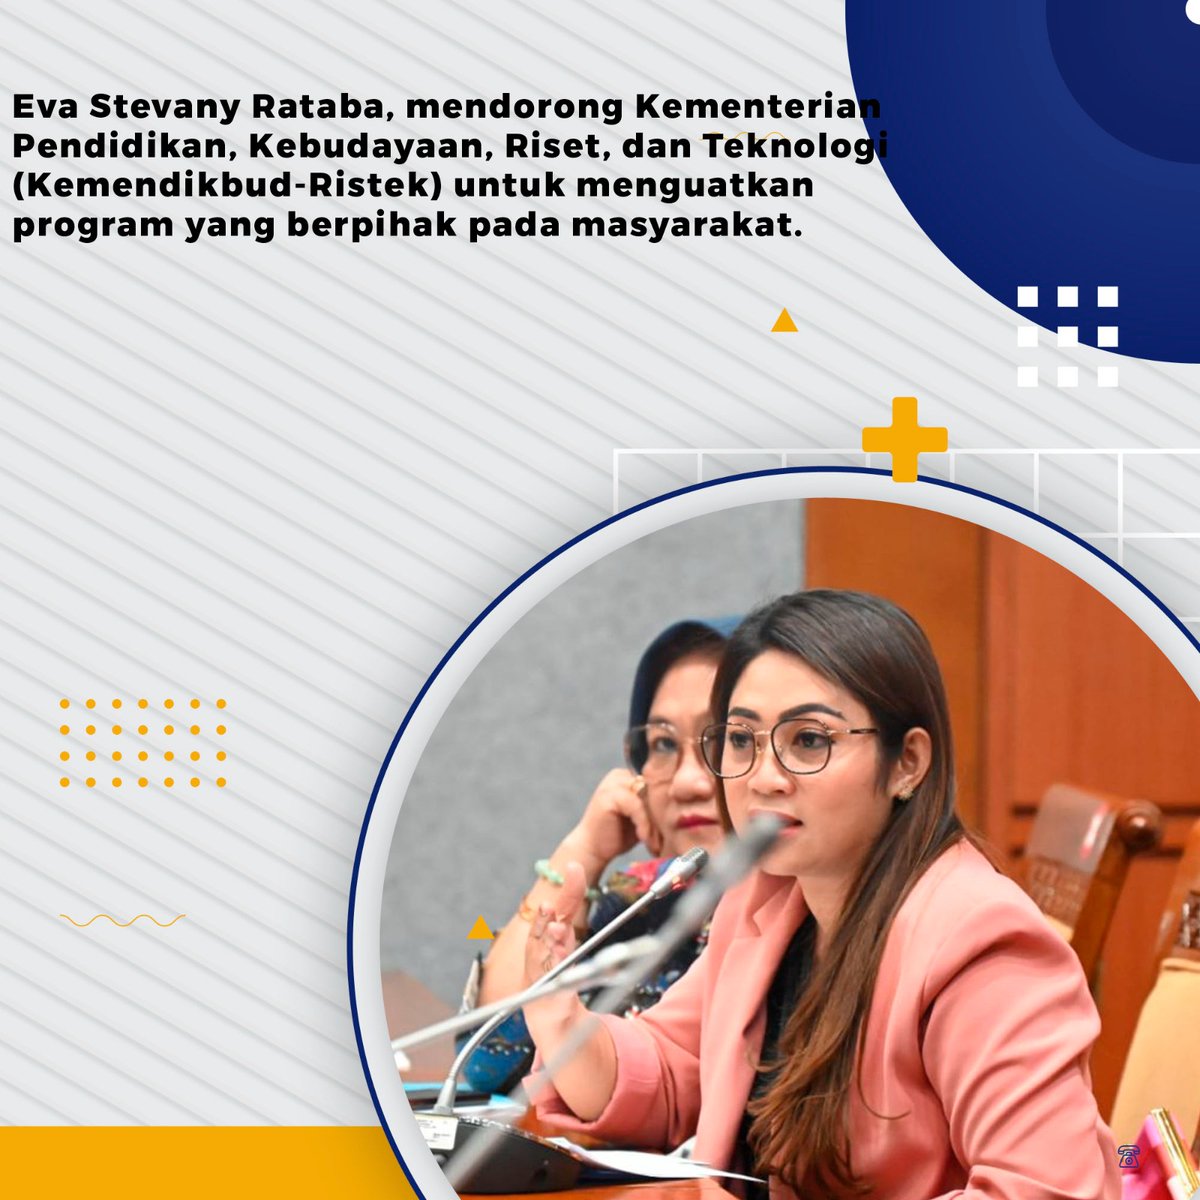 Eva mendorong Kemendikbud Ristek menguatkan program yang berpihak pada masyarakat #ItsTimeRestorasiIndonesia
#NasdemNo5
#AniesPresidenku